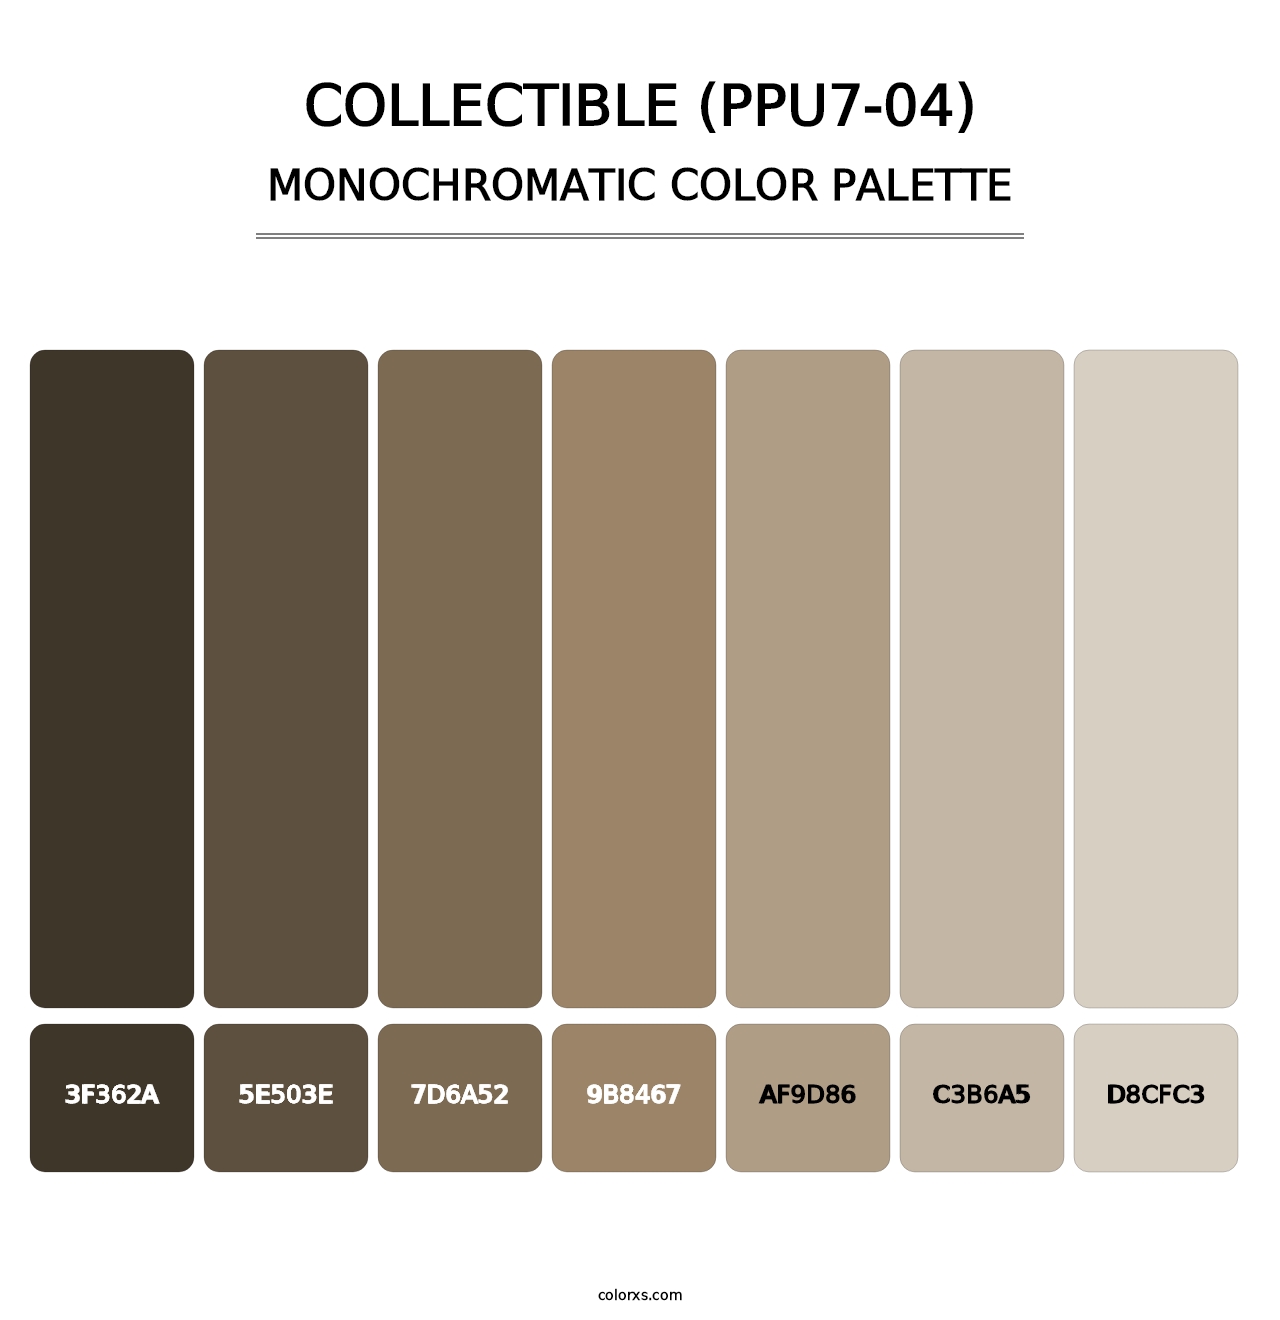 Collectible (PPU7-04) - Monochromatic Color Palette